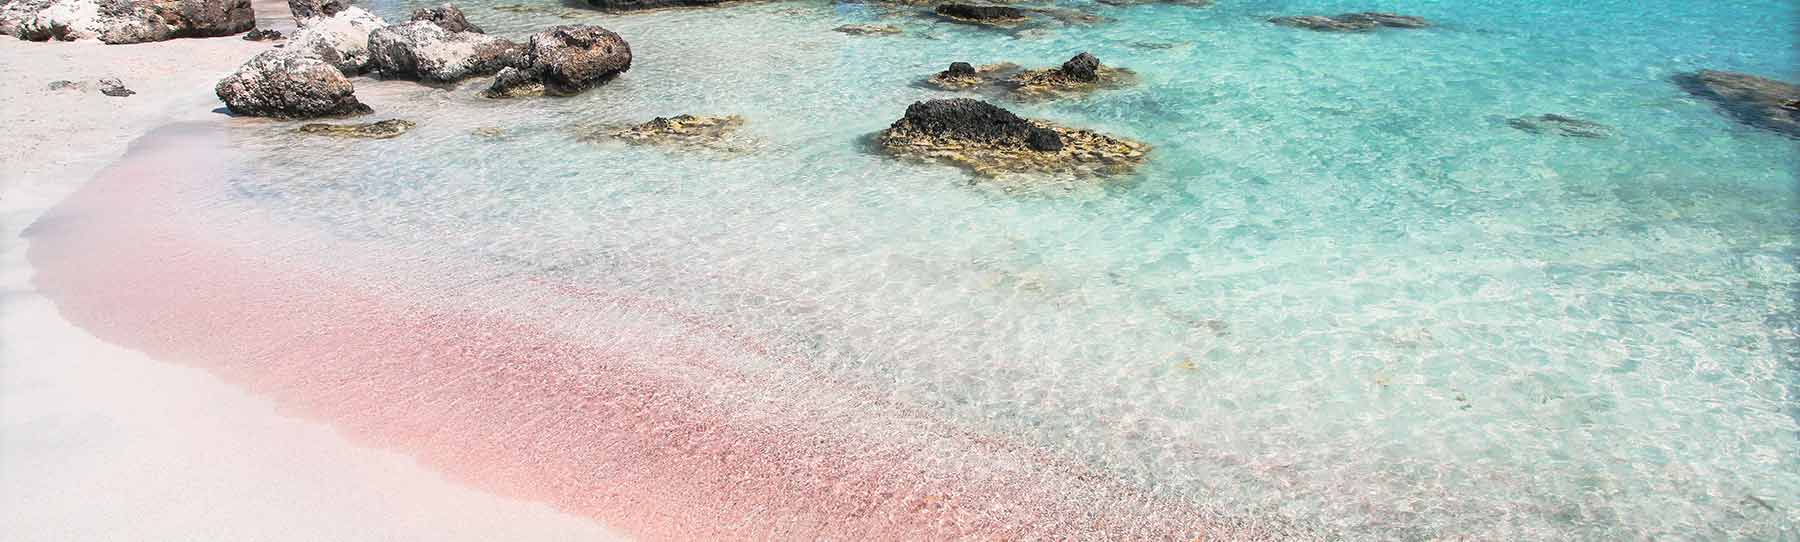 Elafonisi Strand mit rosafarbenen Sand